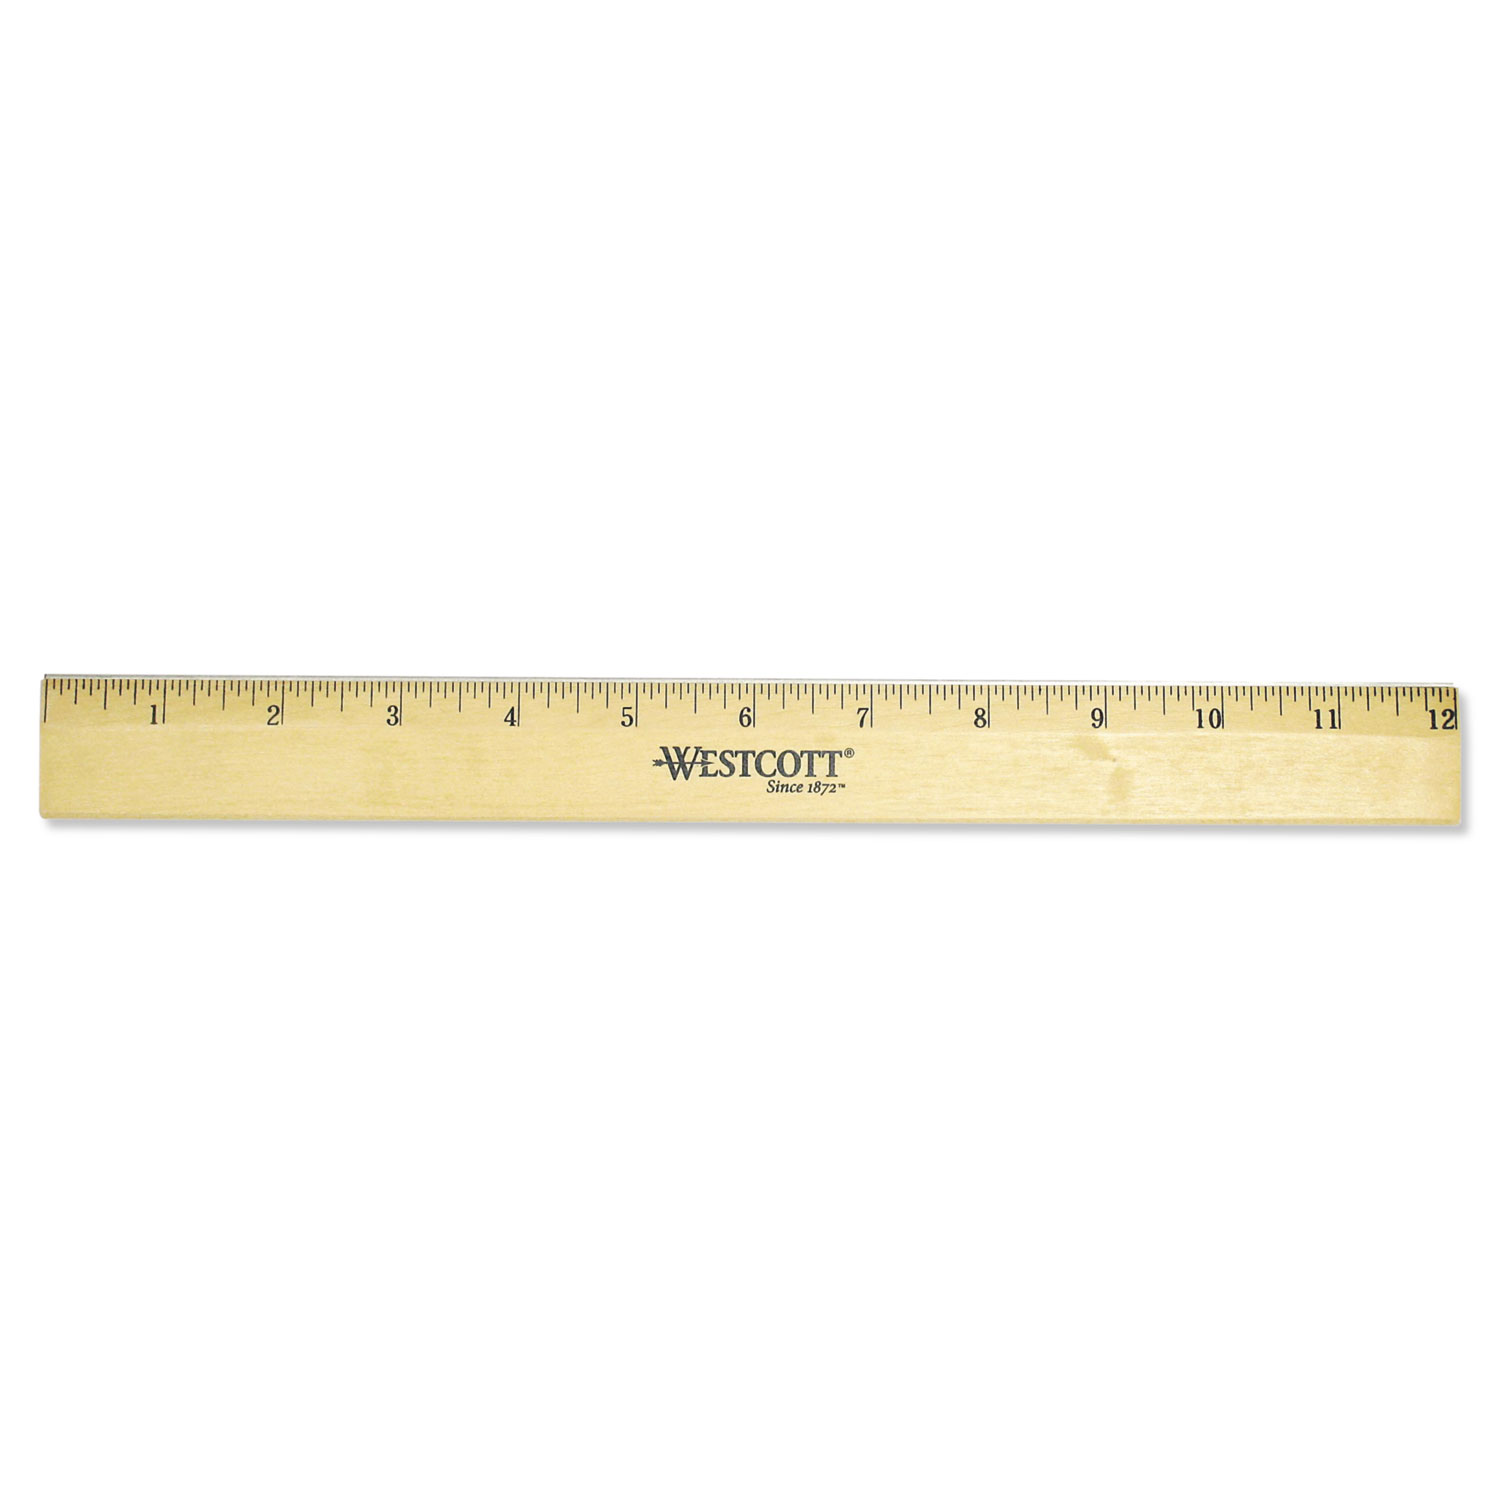 Westcott Yard & Meter Stick